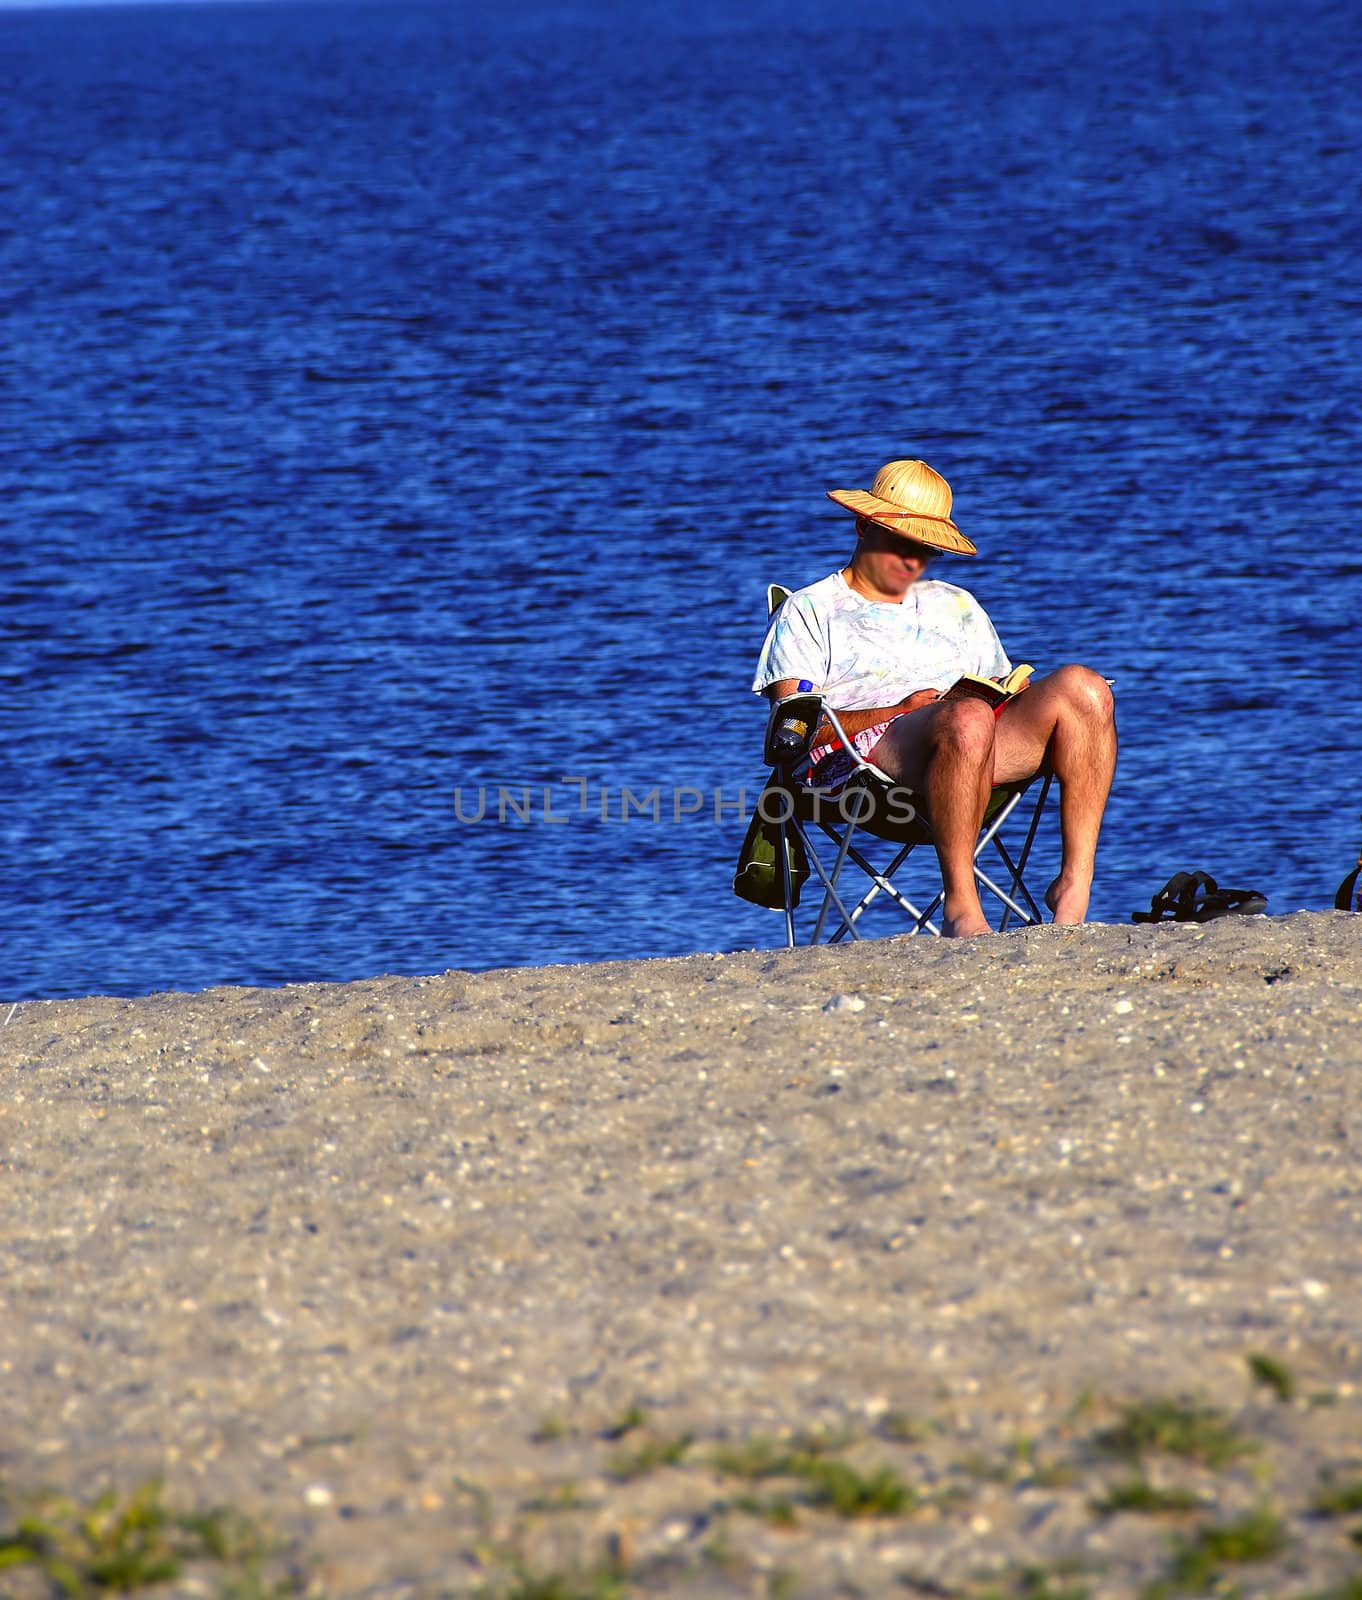 Man enjoying the summer sun at a local beach